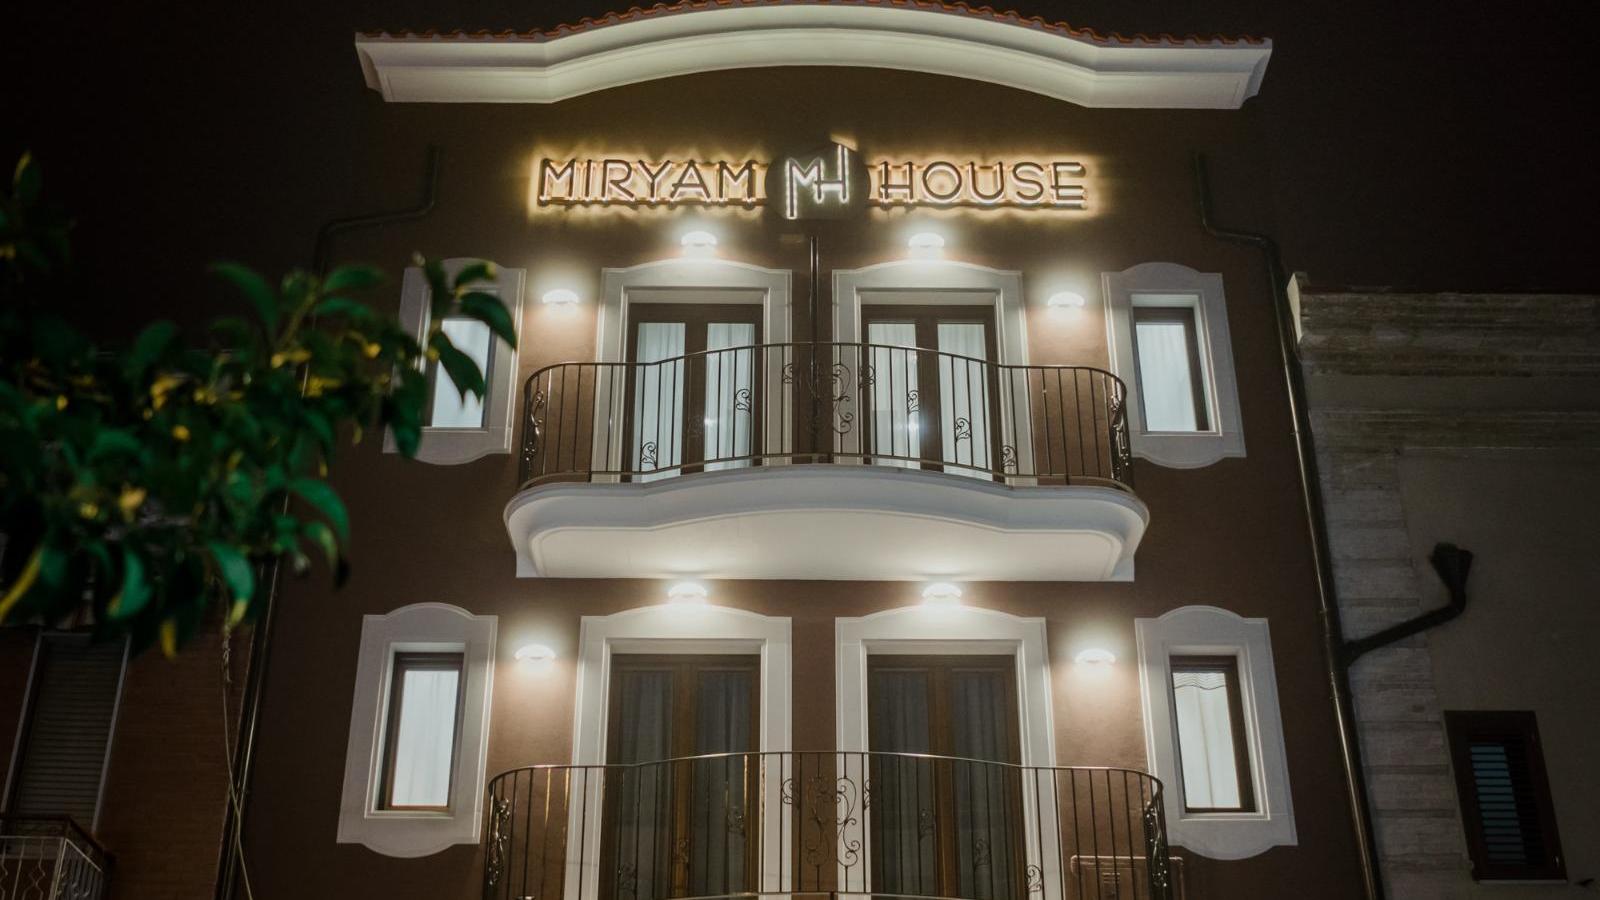  - Miryam House Affittacamere Suite e Relax. | Localtourism.it